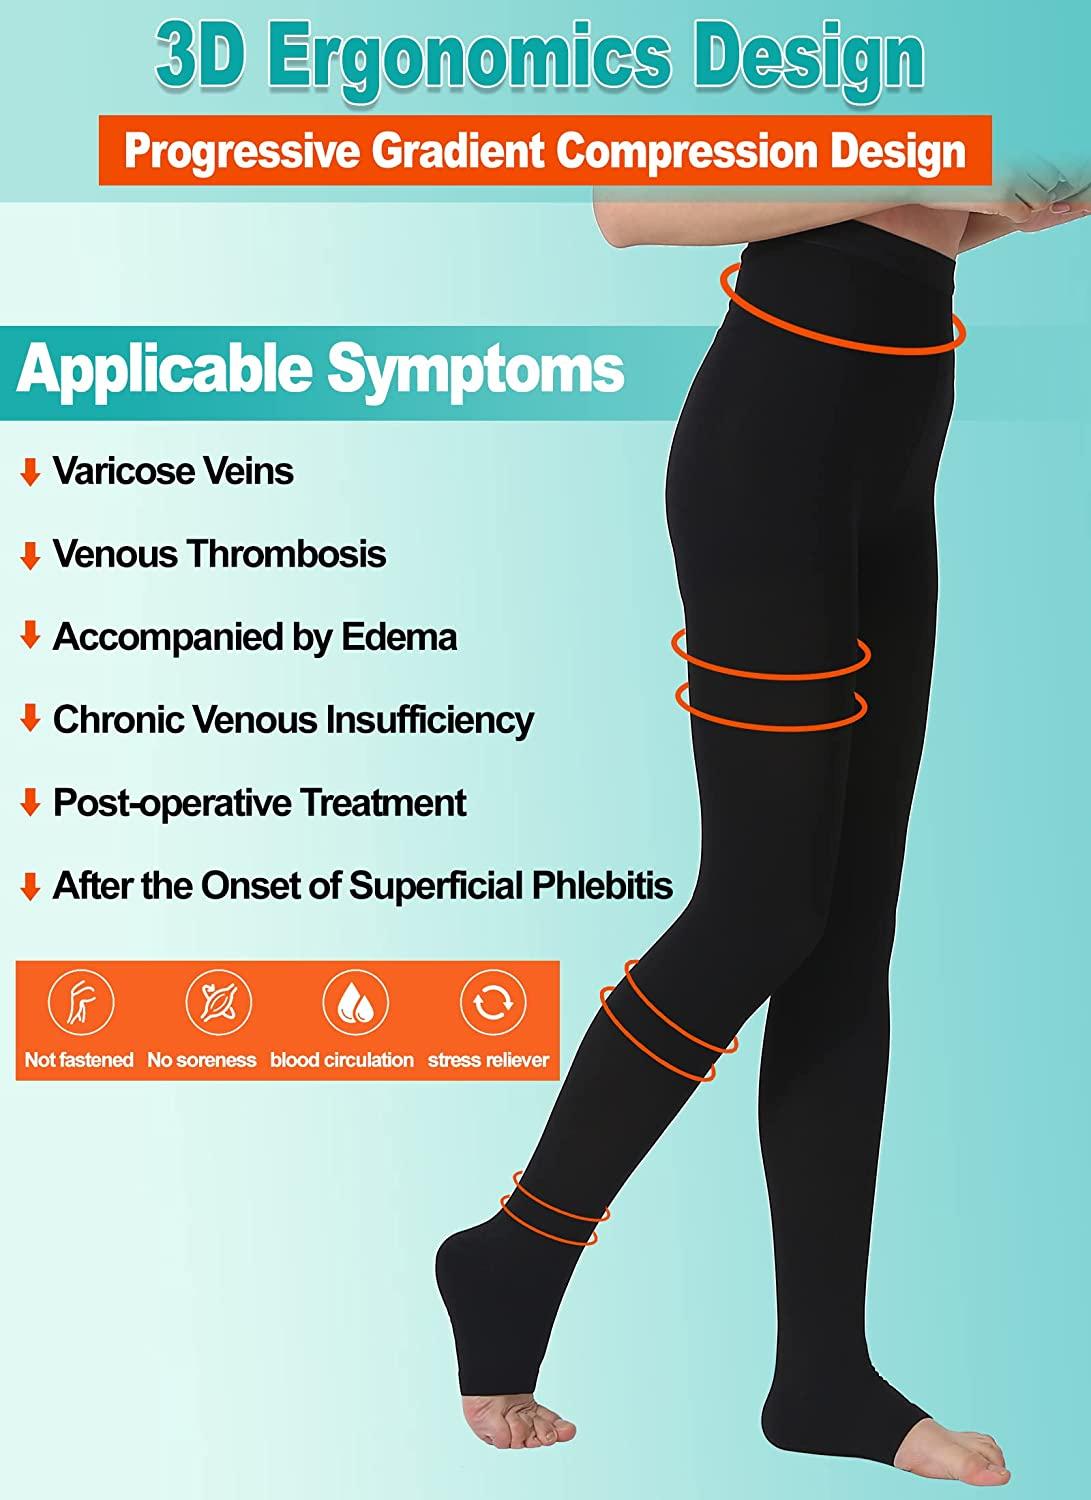 Medical Compression Leggings for Women 20-30 mmhg Compression Pantyhose,  Medical Compression Tights for Varicose Veins, Swelling,  Lymphedema(Black(Footless)_M) Medium (Footless)black 1